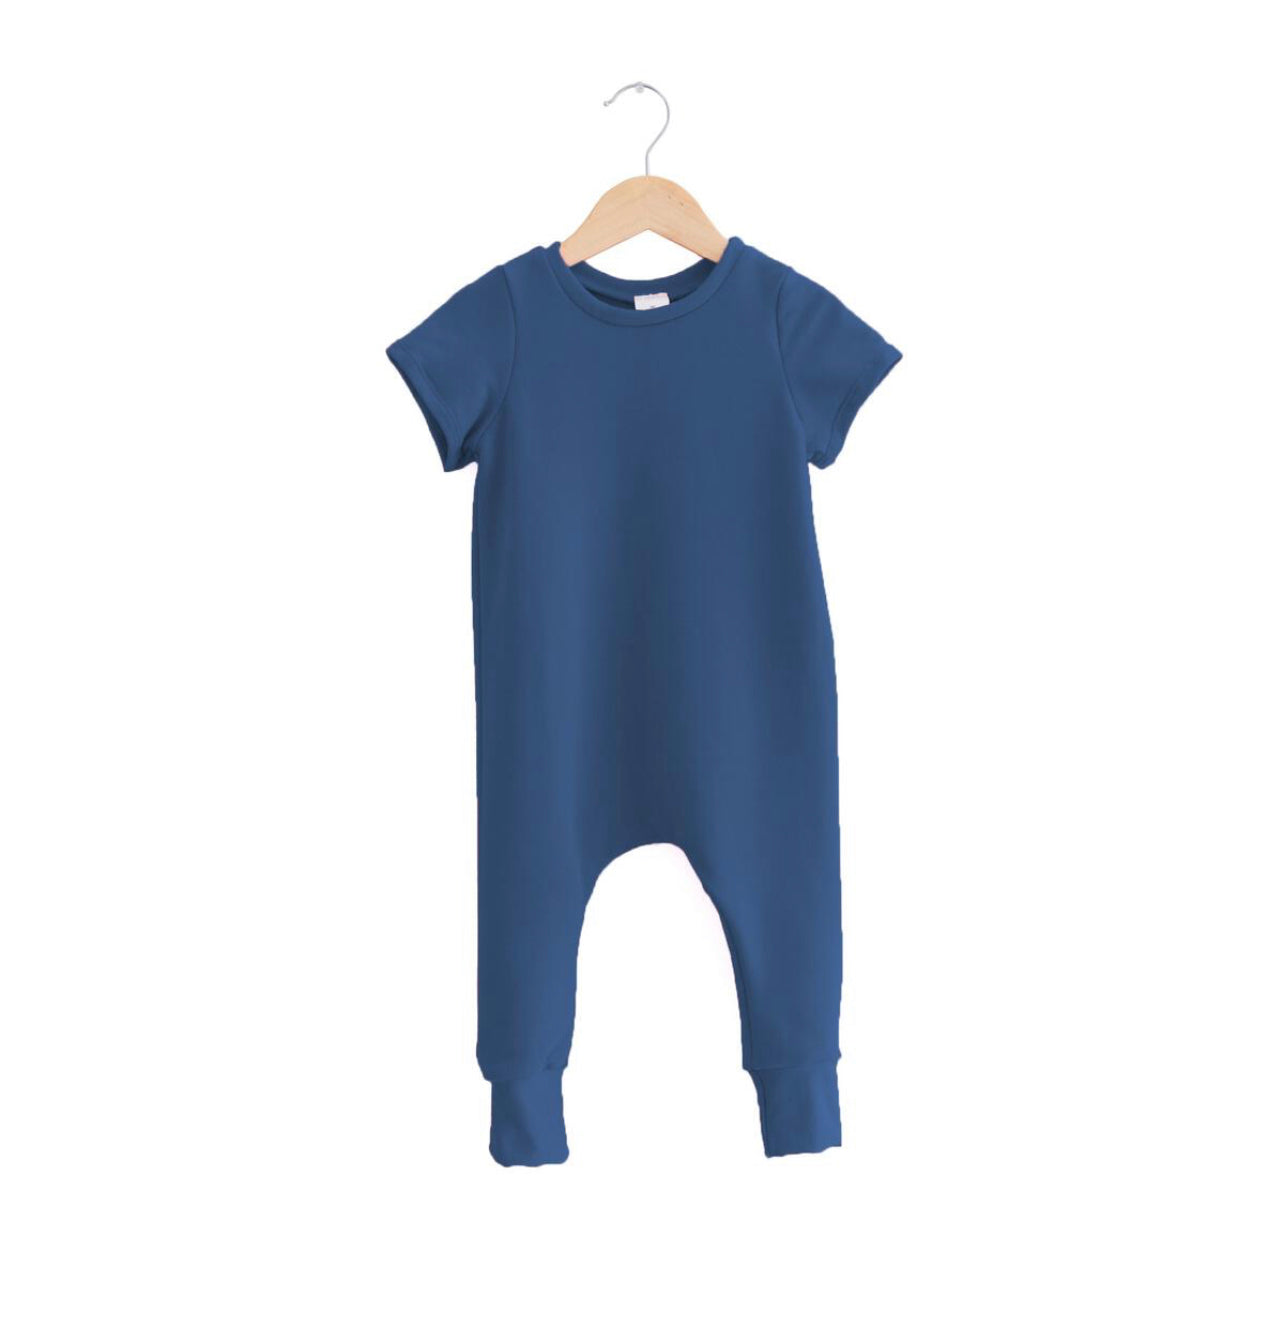 Posh & Cozy BEAU Tee Shirt Romper Baby/Toddler (4 colors)